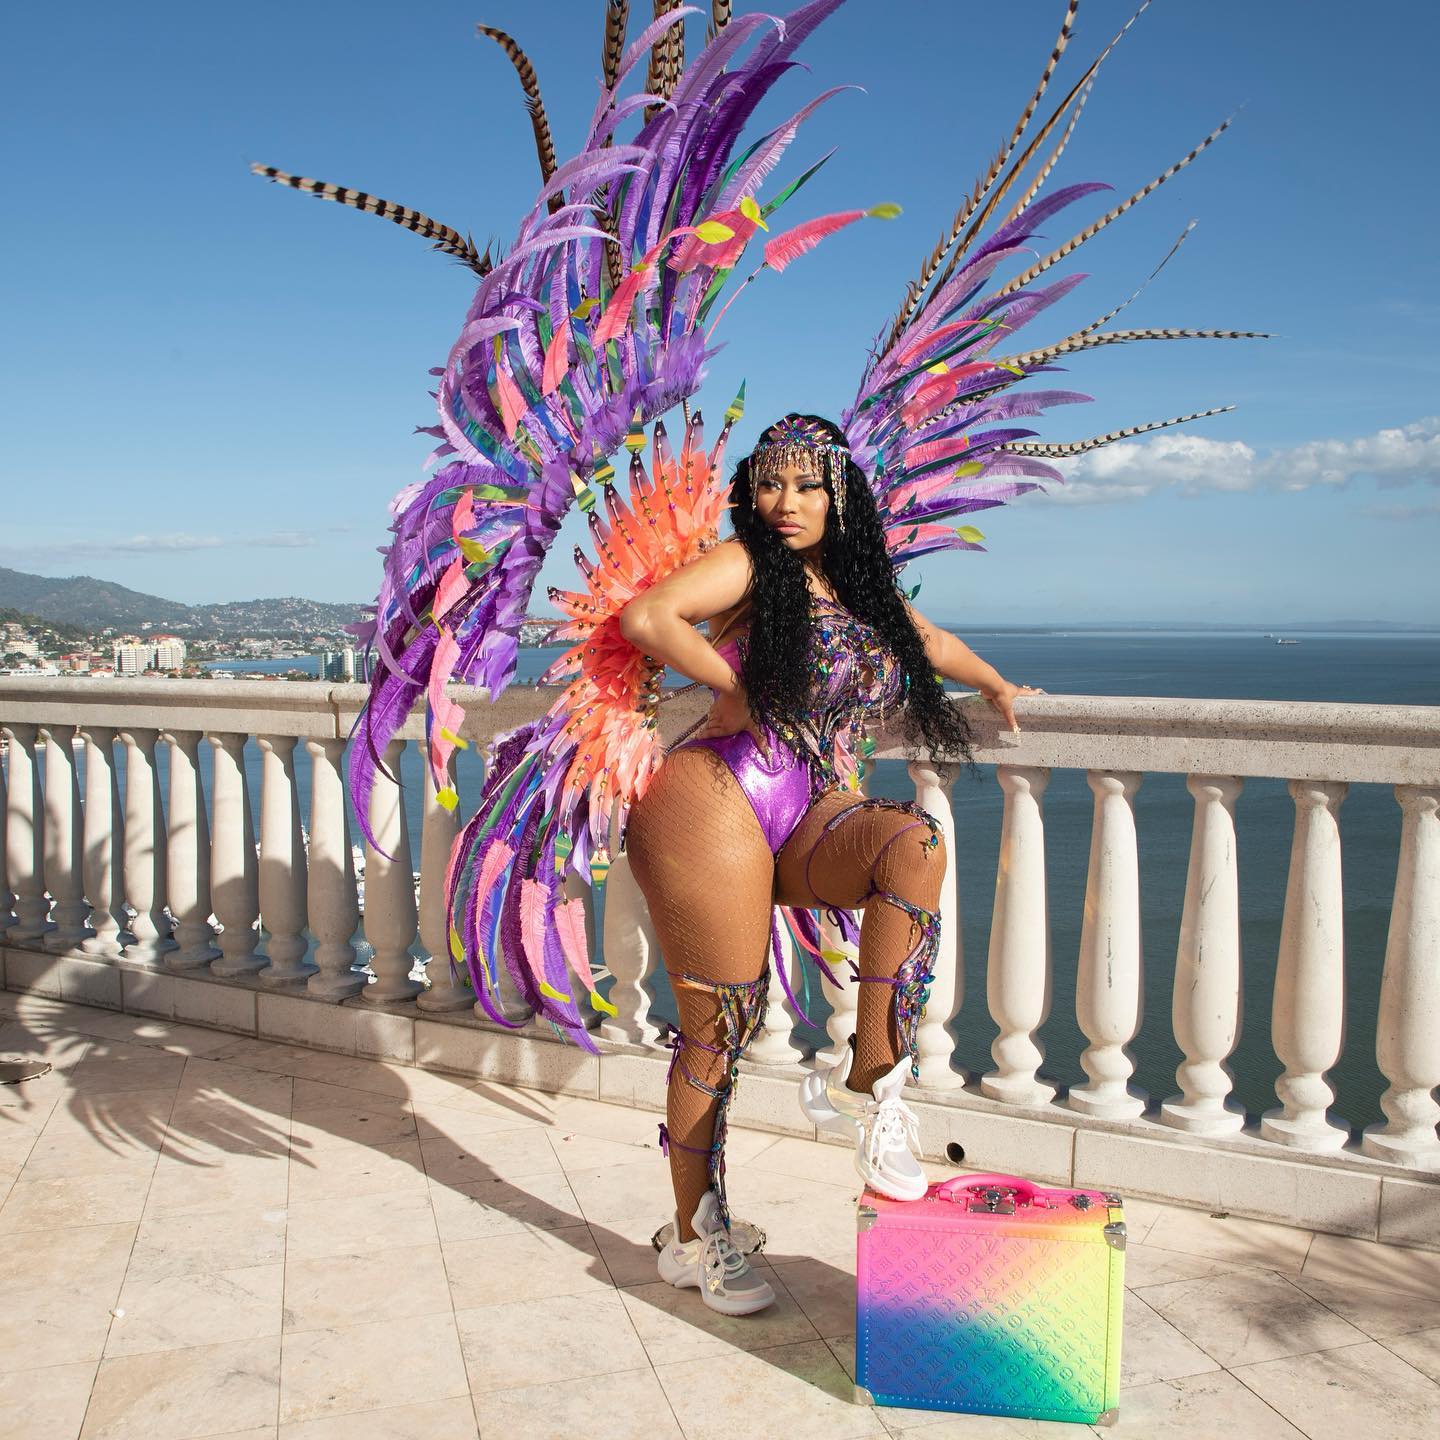 FOTOS Nicki Minaj hace carnaval! - Photo 4